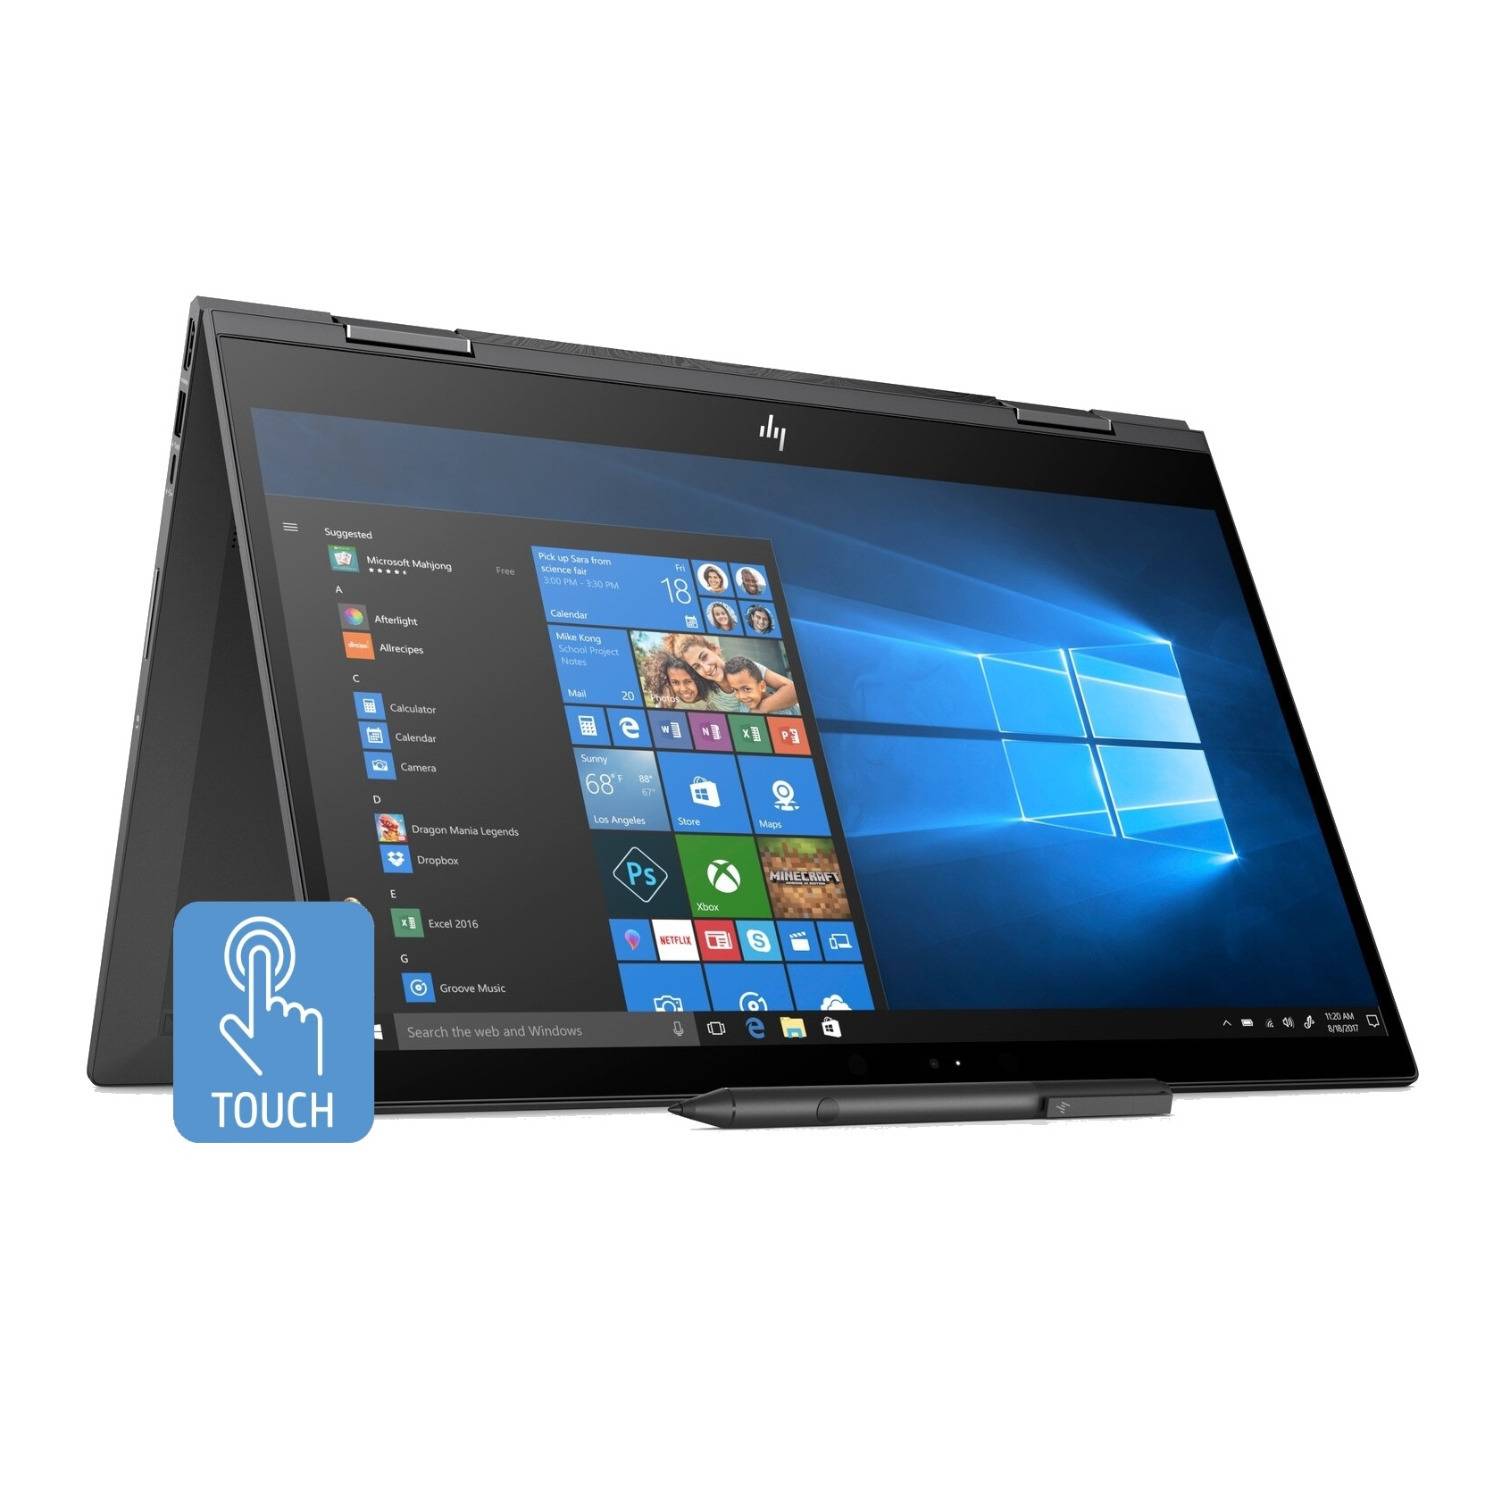 HP Envy x360 15.6-in Full HD Touch WLED AMD Ryzen 5 2500 Quad-Core 8GB 256GB SSD Convertible Laptop